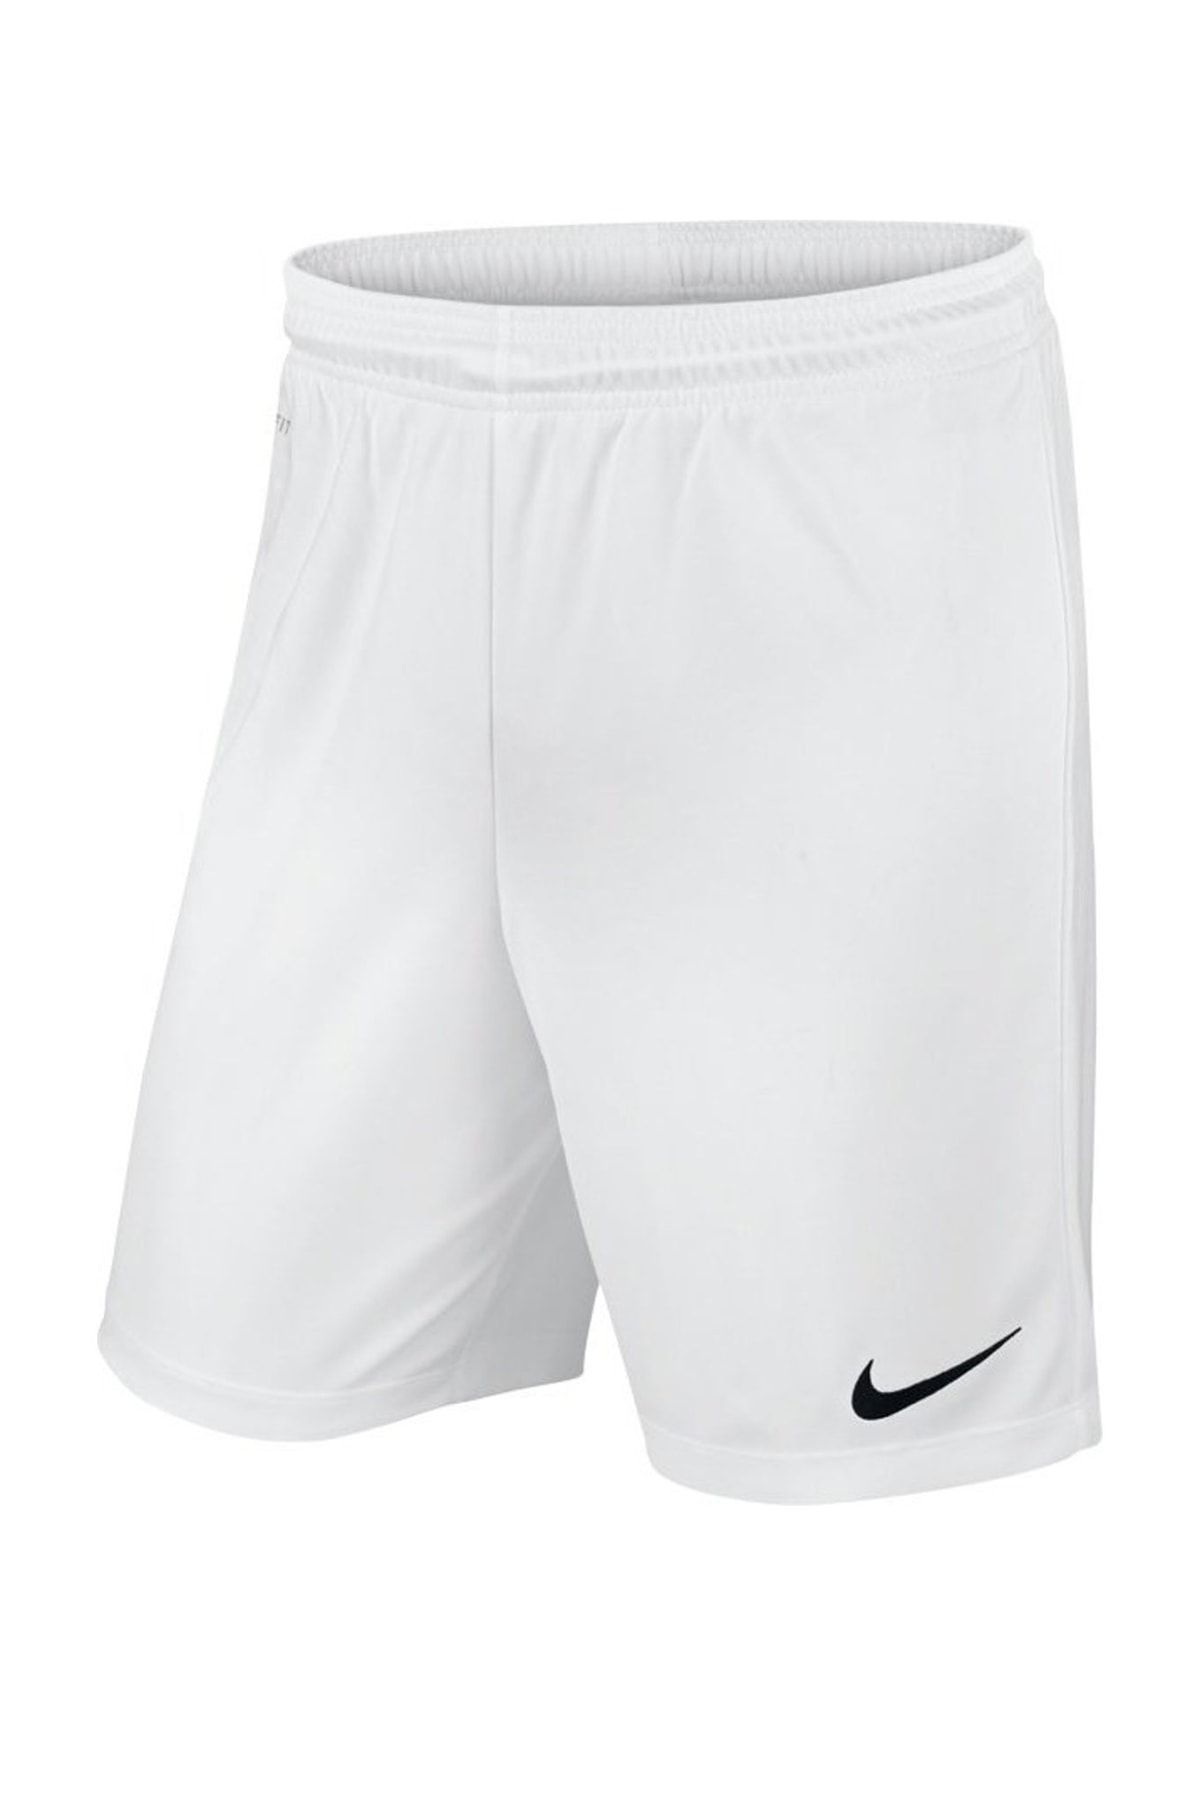 Nike Erkek Şort - Park II Knit WB Futbol Maç Şortu - 725903-100